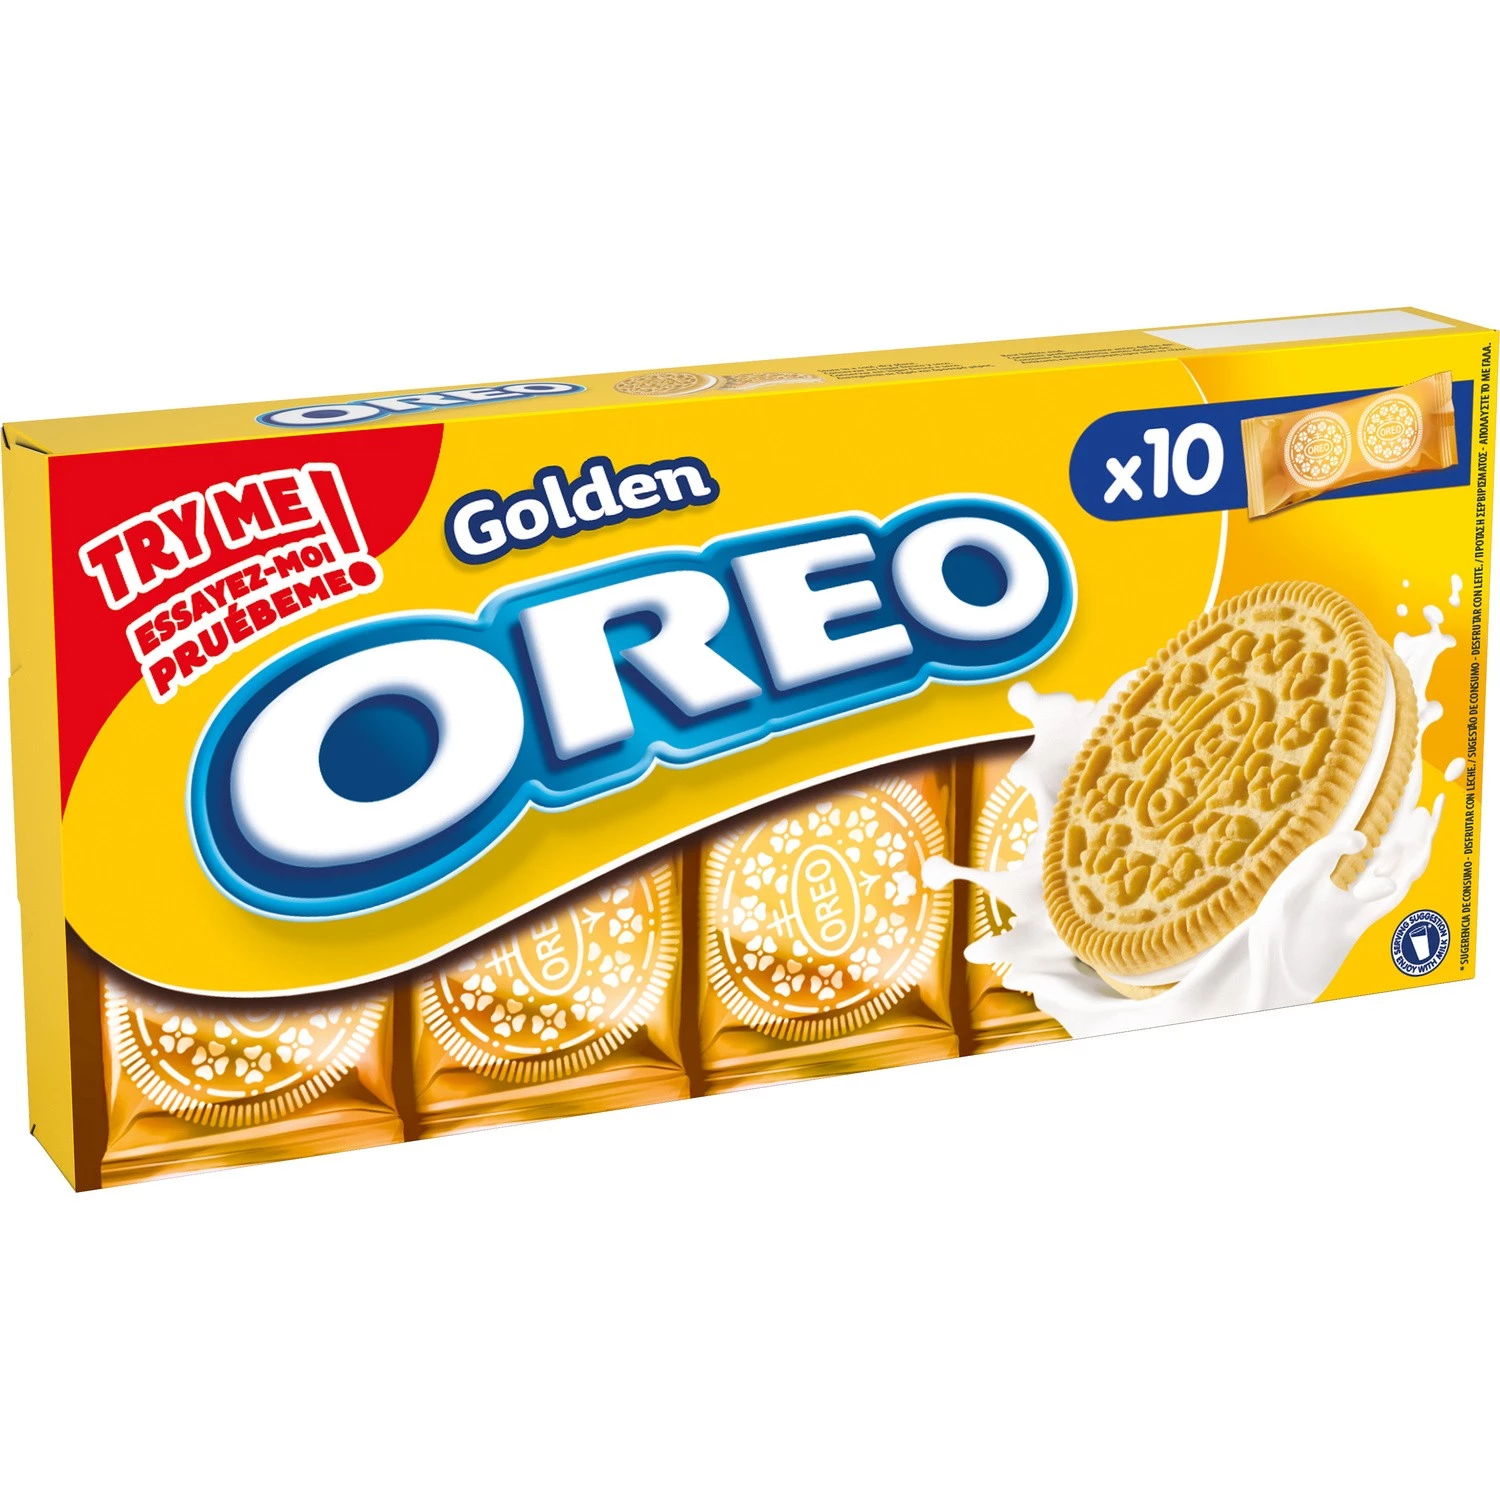 Gouden vanille gevulde koekjes 220g - OREO